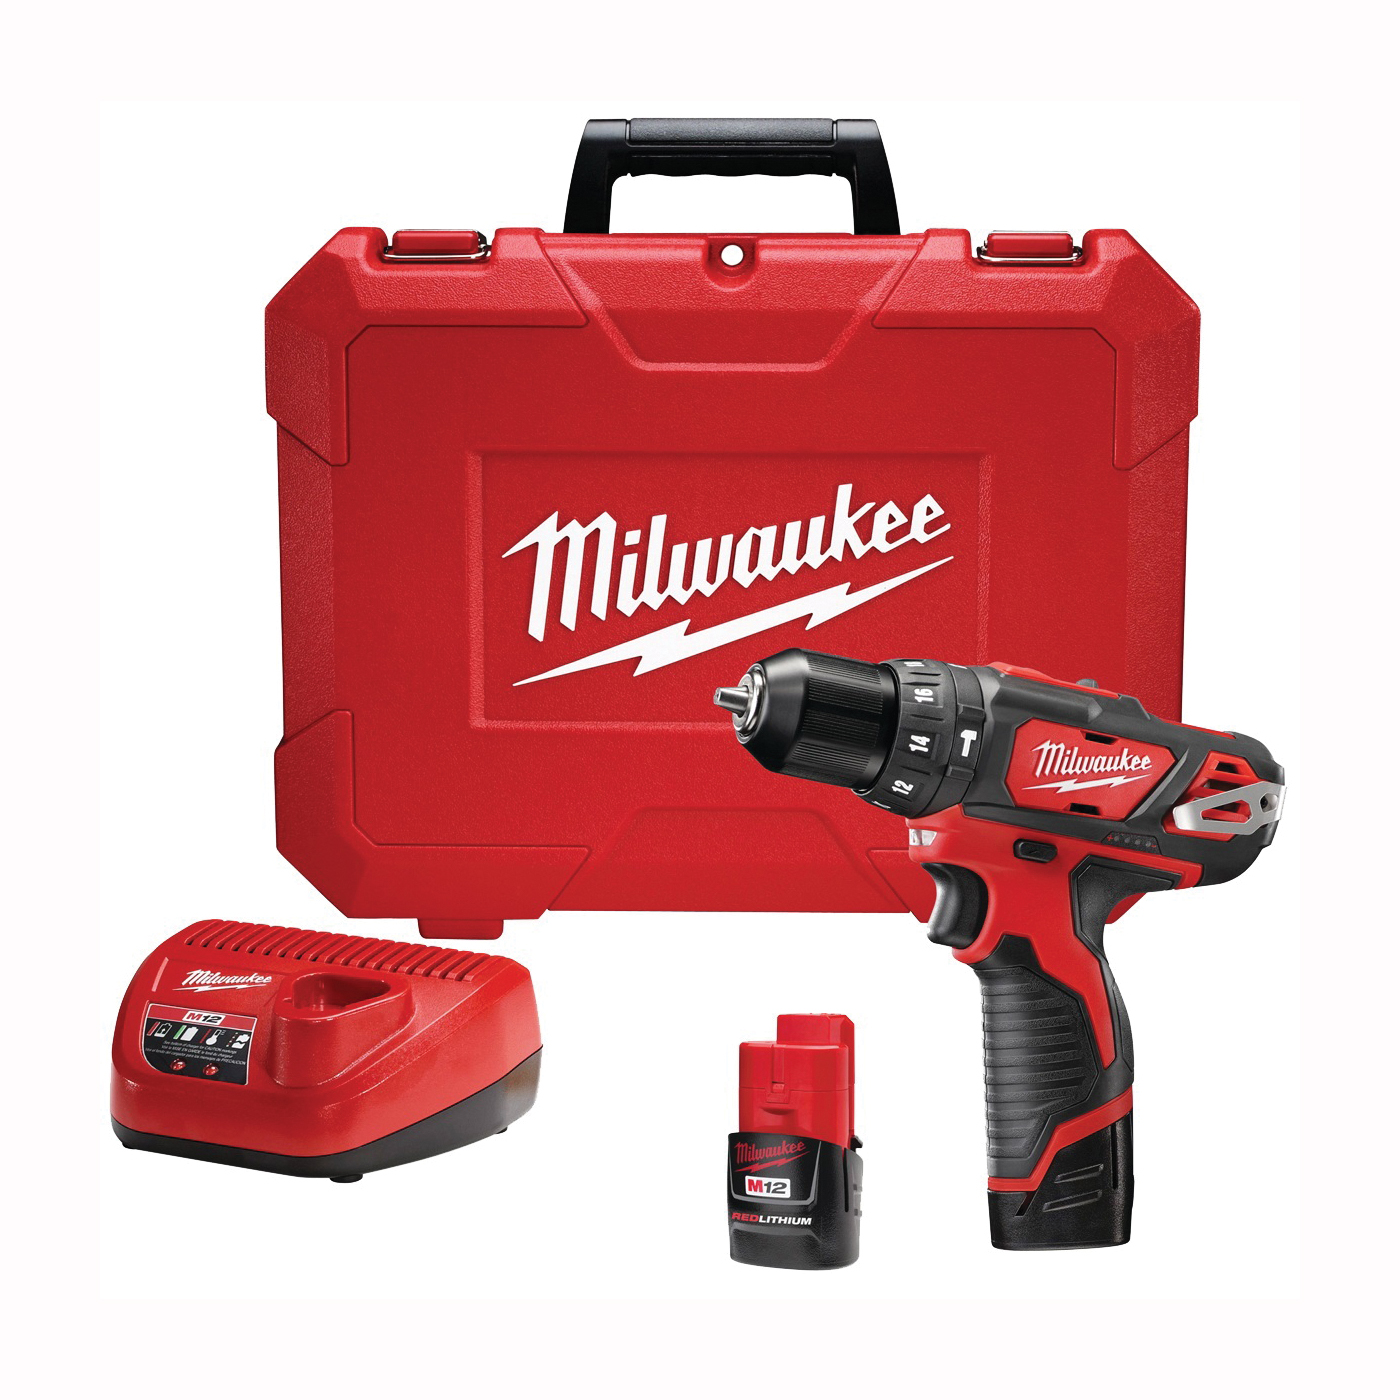 Milwaukee 2408-22 Hammer Drill/Driver Kit, Battery Included, 12 V, 1.5 Ah, 3/8 in Chuck, Keyless Chuck